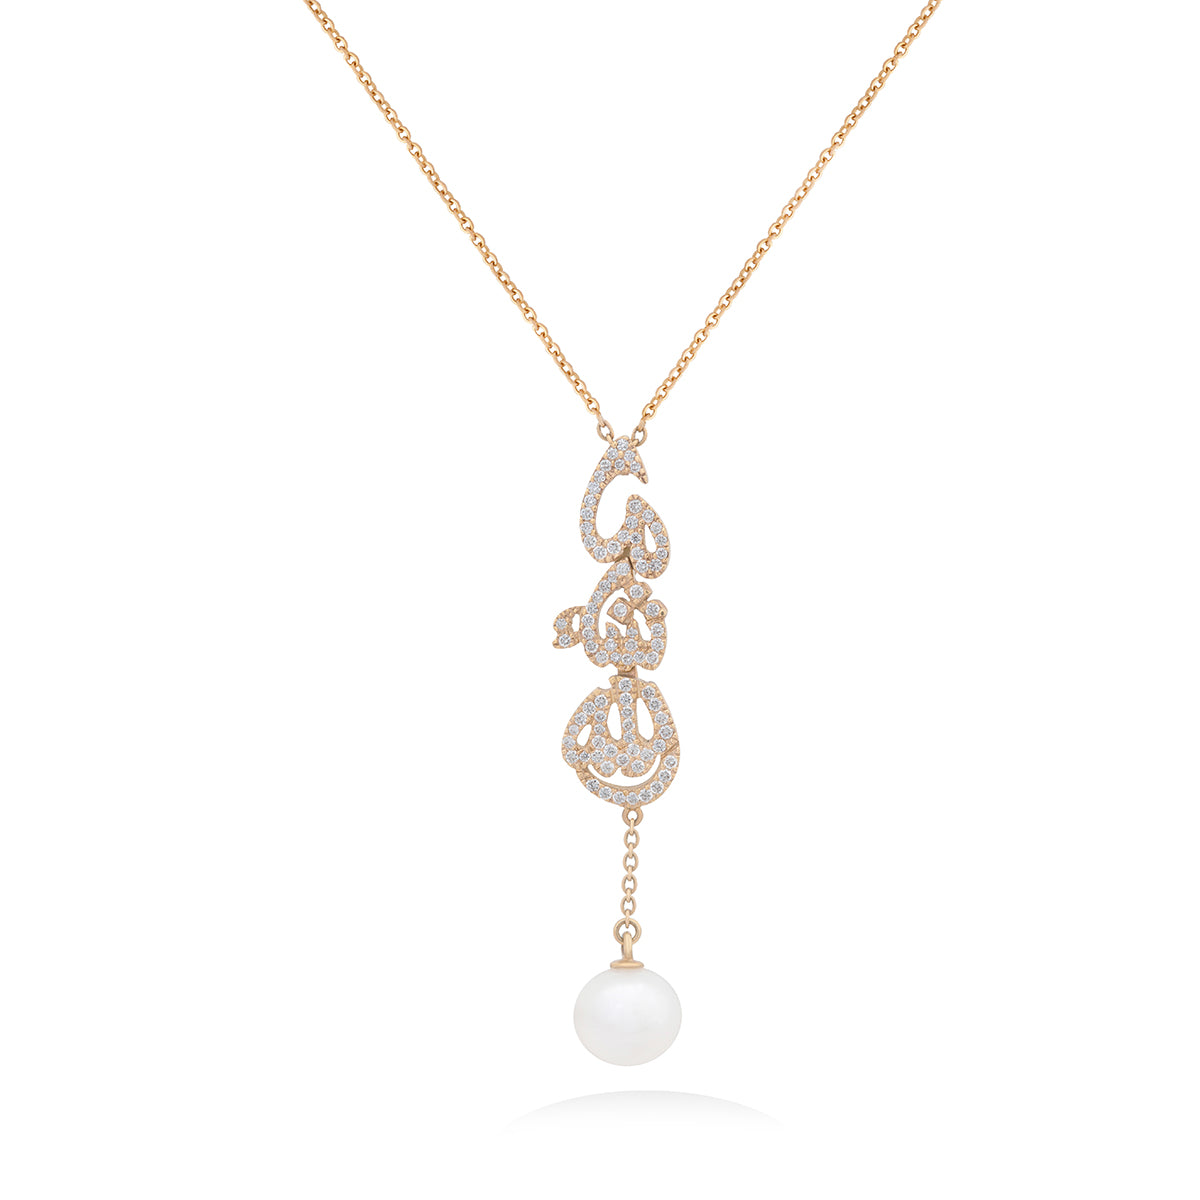 Radiant Mashallah Diamond Necklace in 18k Gold